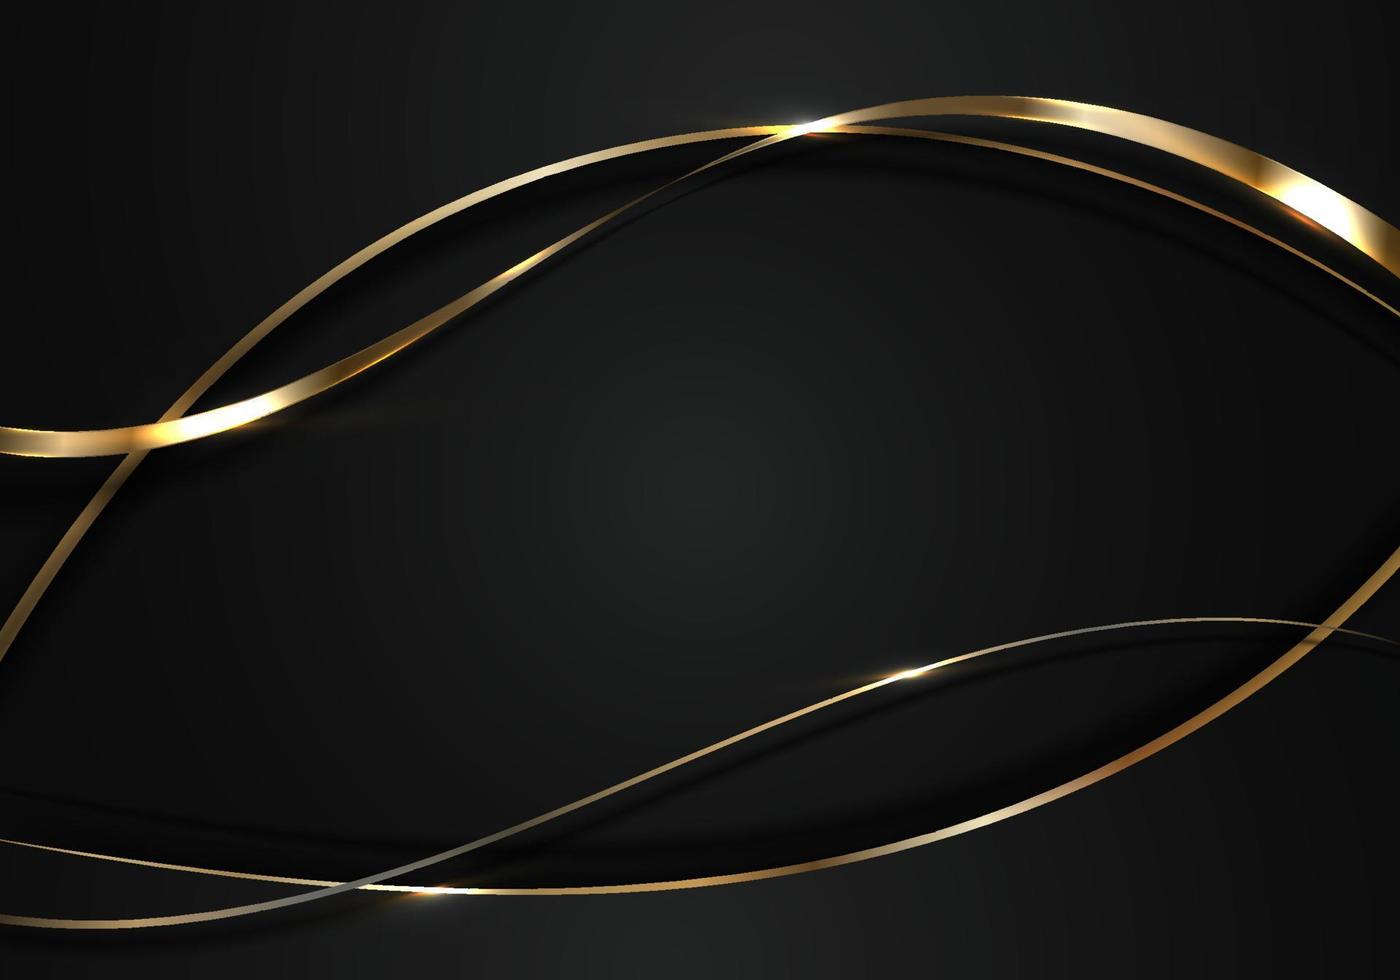 abstrato 3d elegante ouro e linhas de onda curvas pretas com luz brilhante brilhante no estilo de luxo de fundo escuro vetor